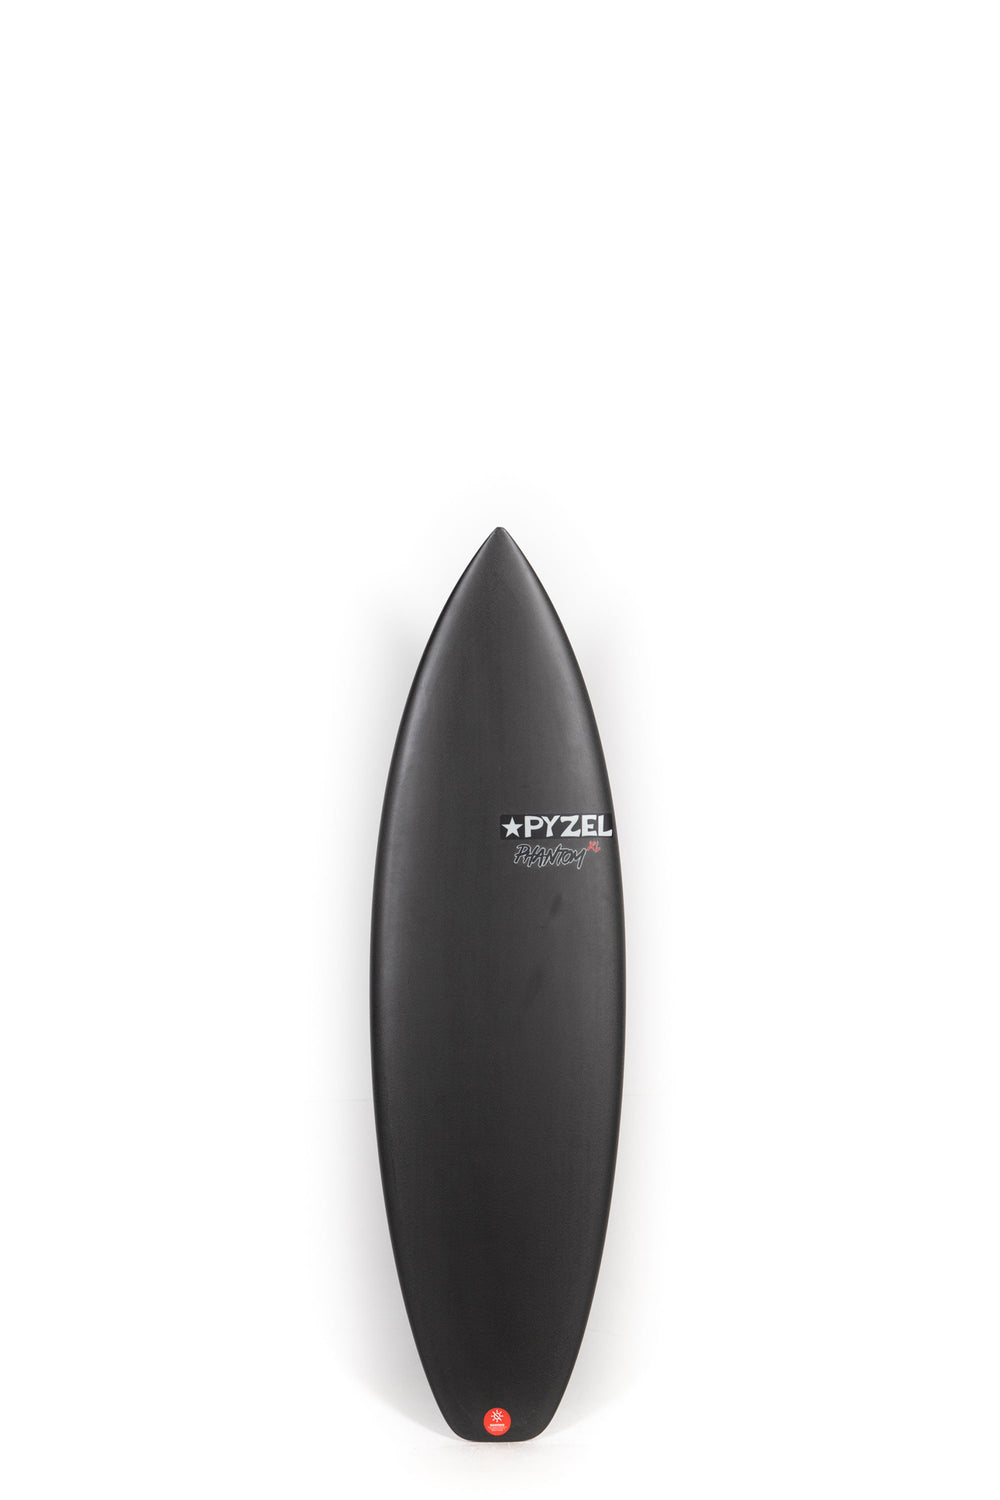 Pyzel Surfboards - PHANTOM XL in Dark Arts - 5'8